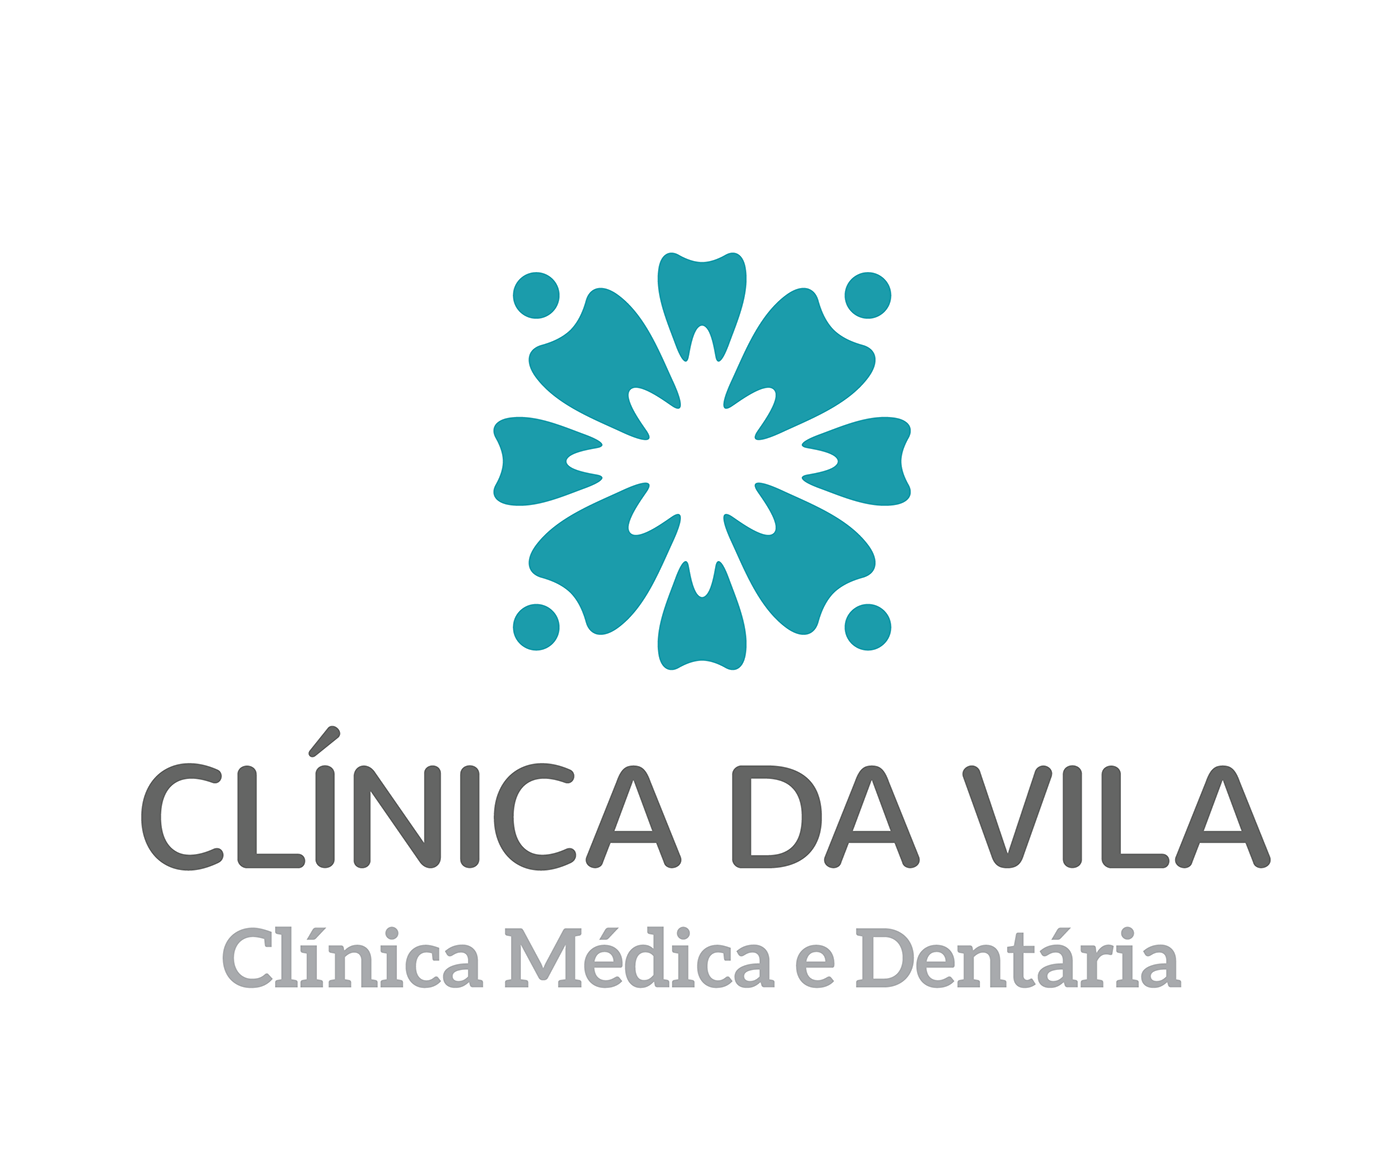 branding  Stationery dental clinic brand Portugal tilework pattern teeth logo